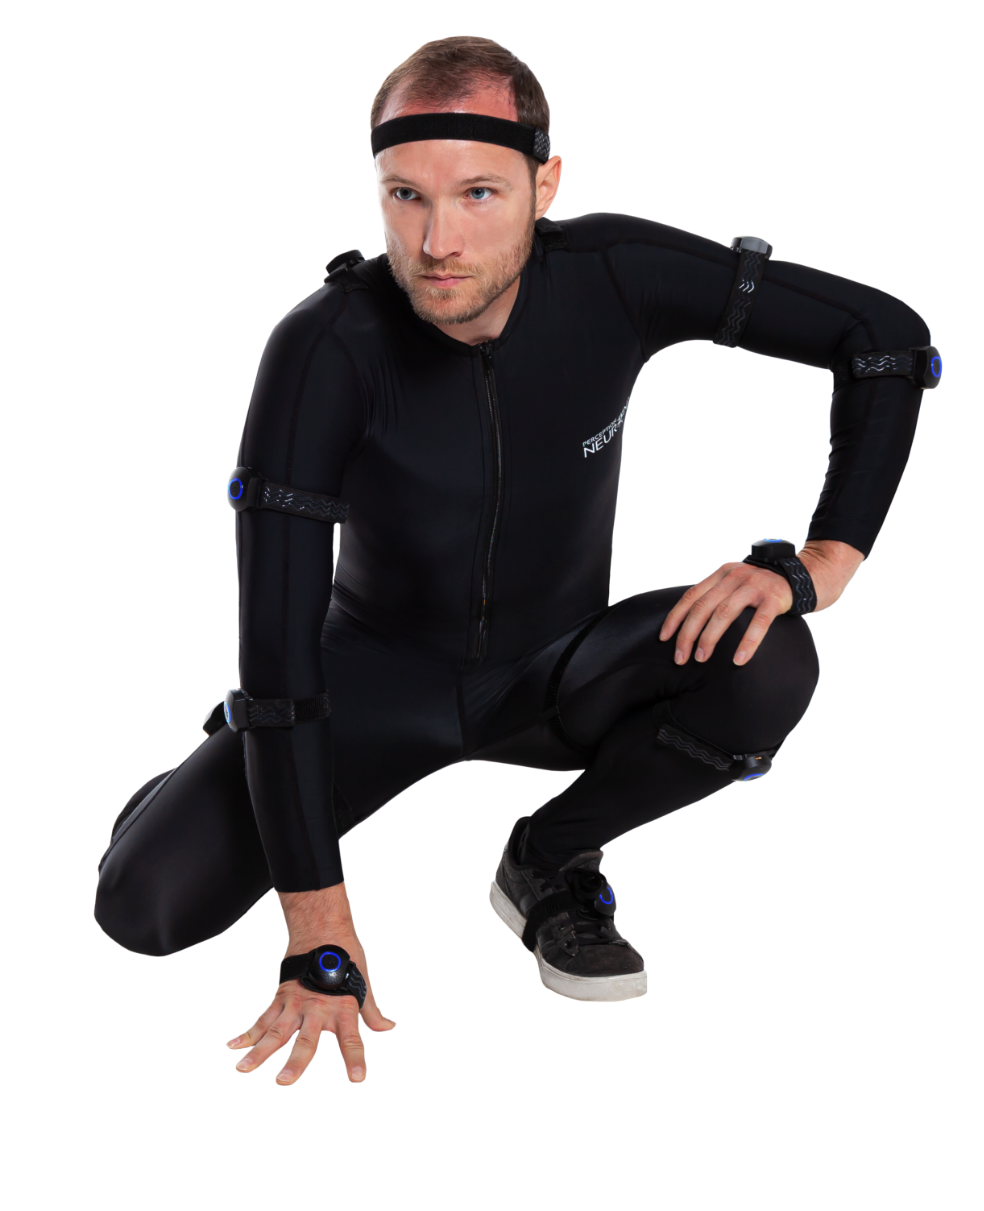 Male stunt man wearing the Perception Neuron Studio motion capture suit